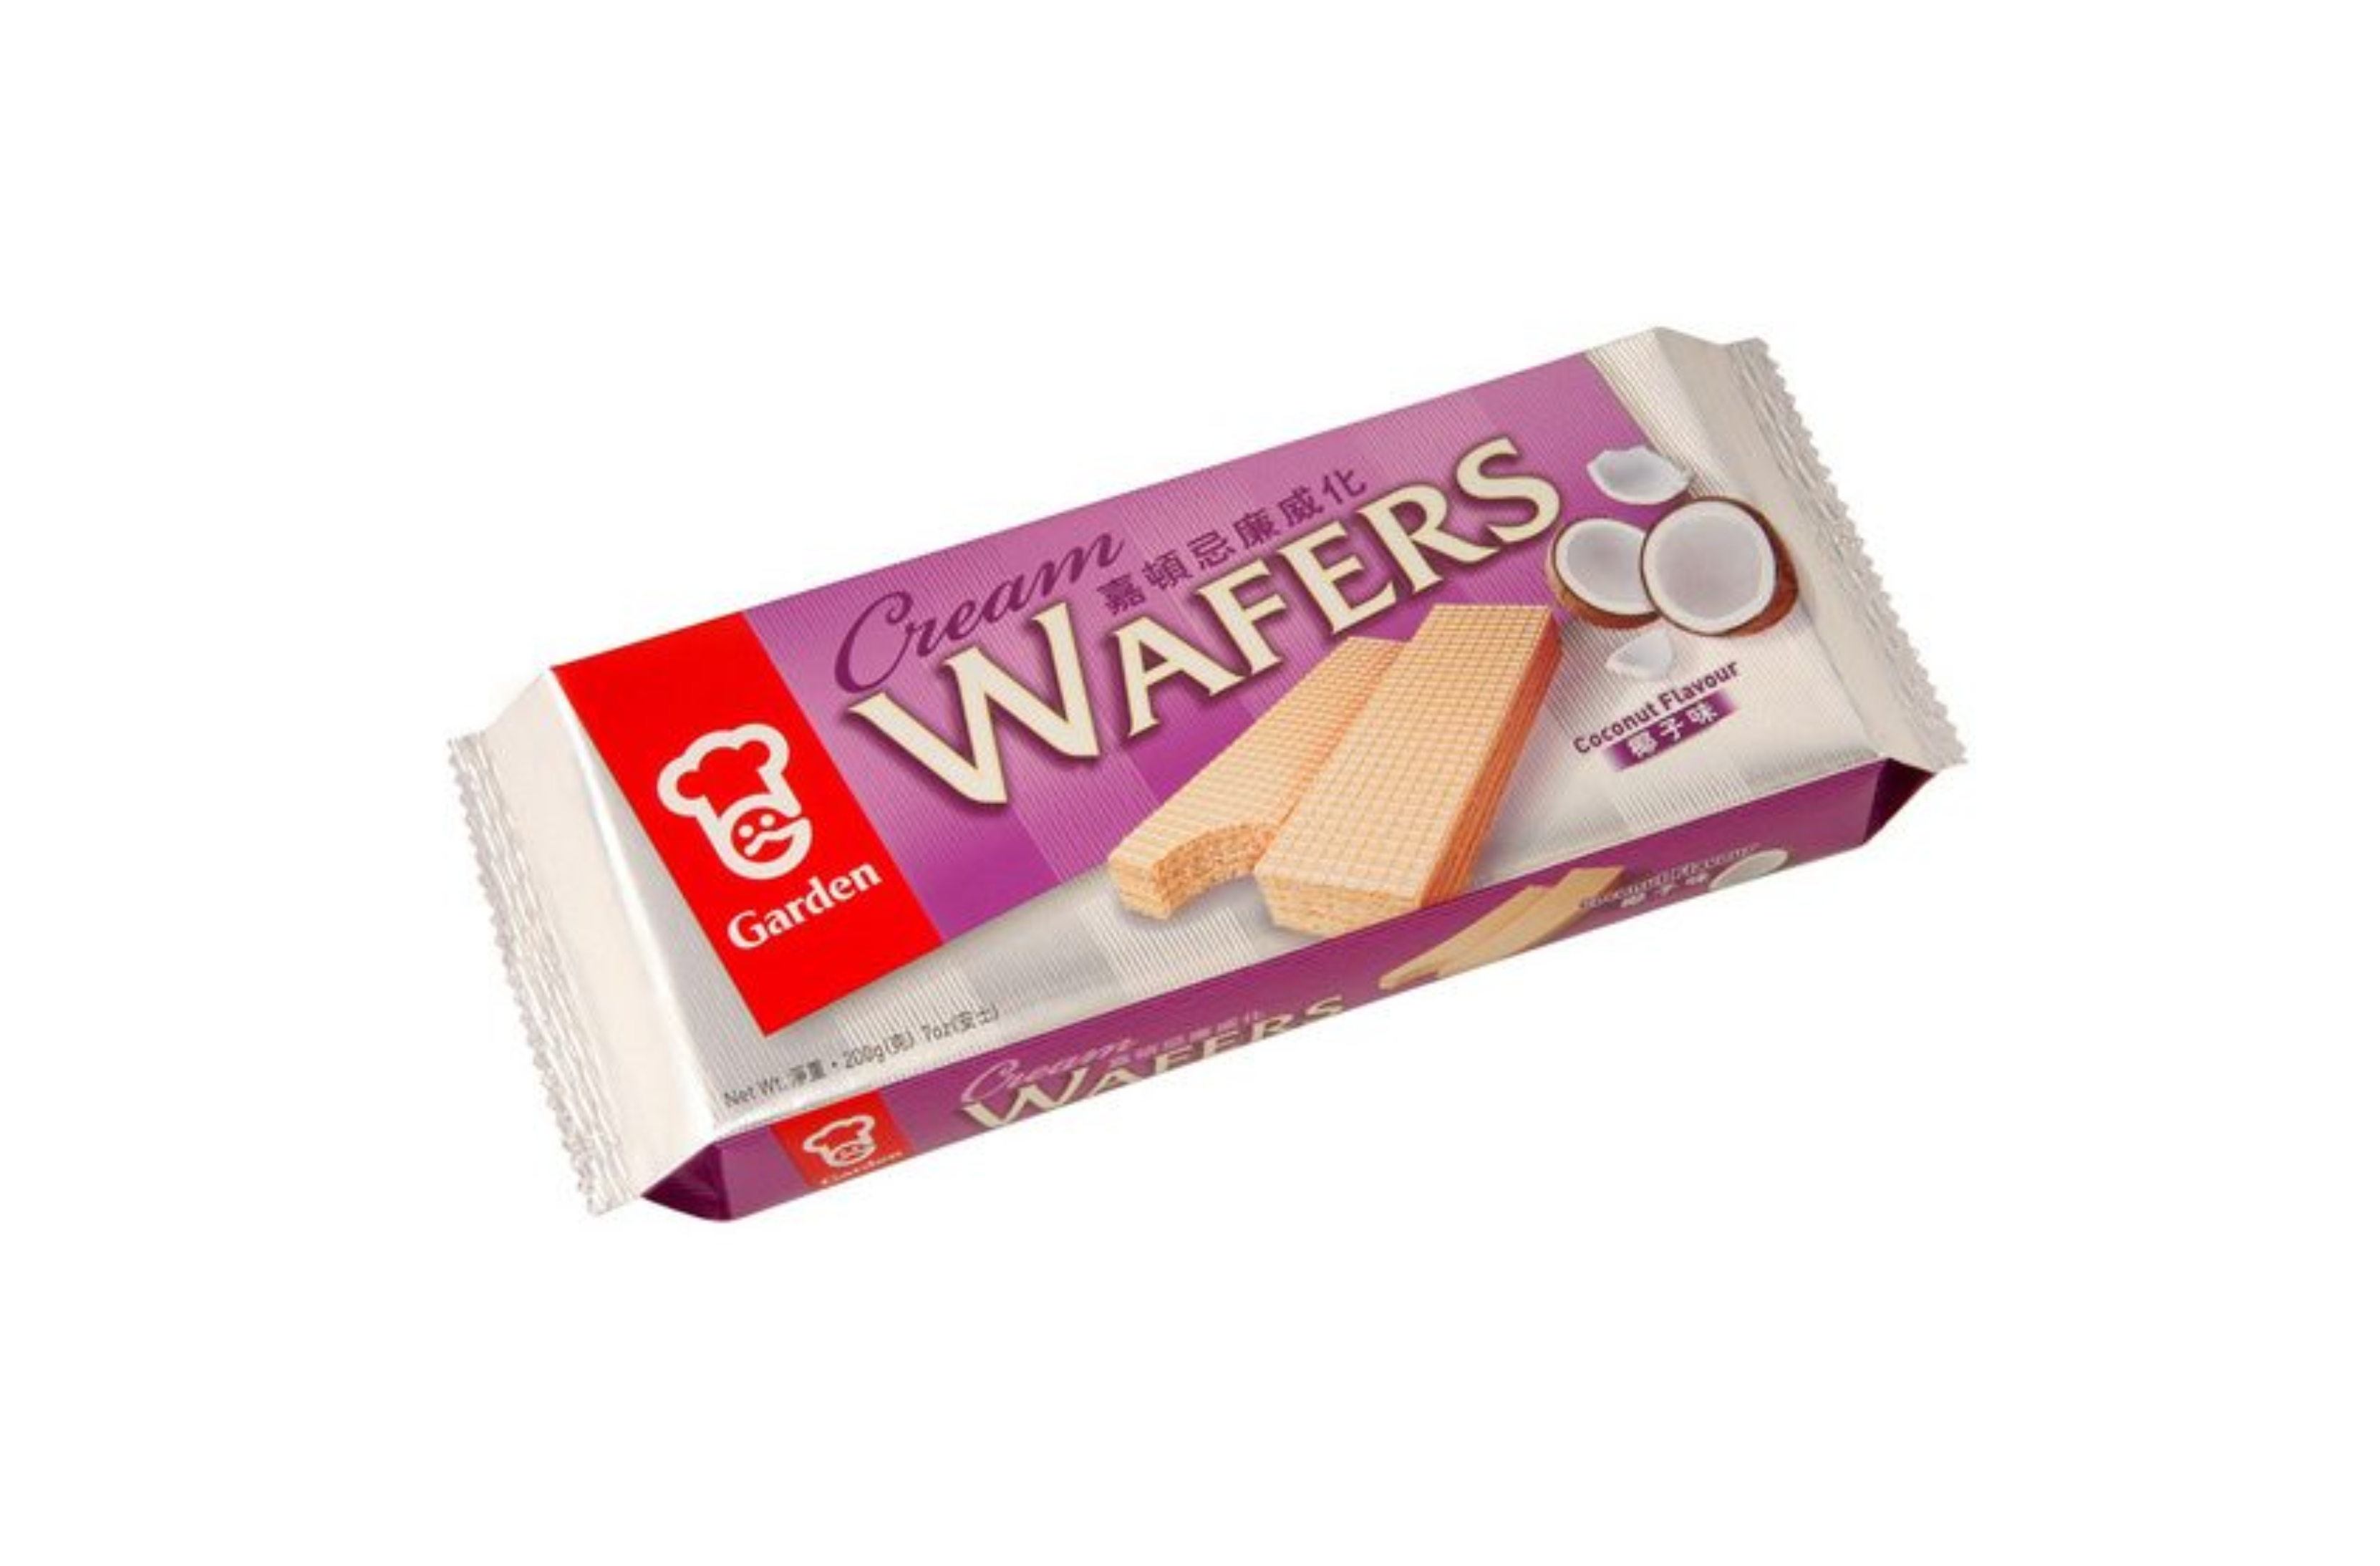 Cream wafers coconut flavour